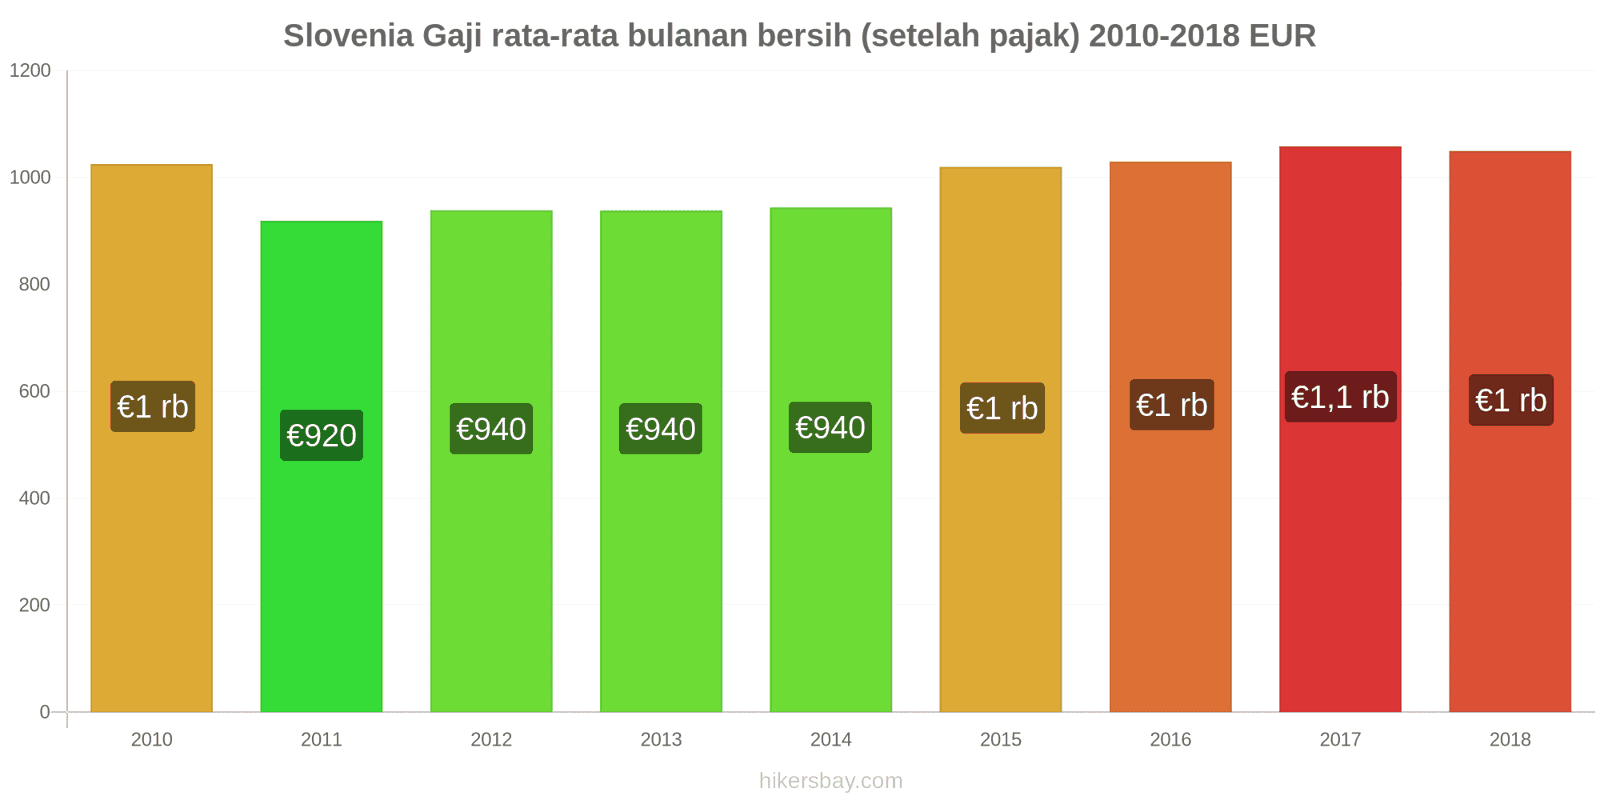 Slovenia perubahan harga Gaji bersih rata-rata bulanan (setelah pajak) hikersbay.com